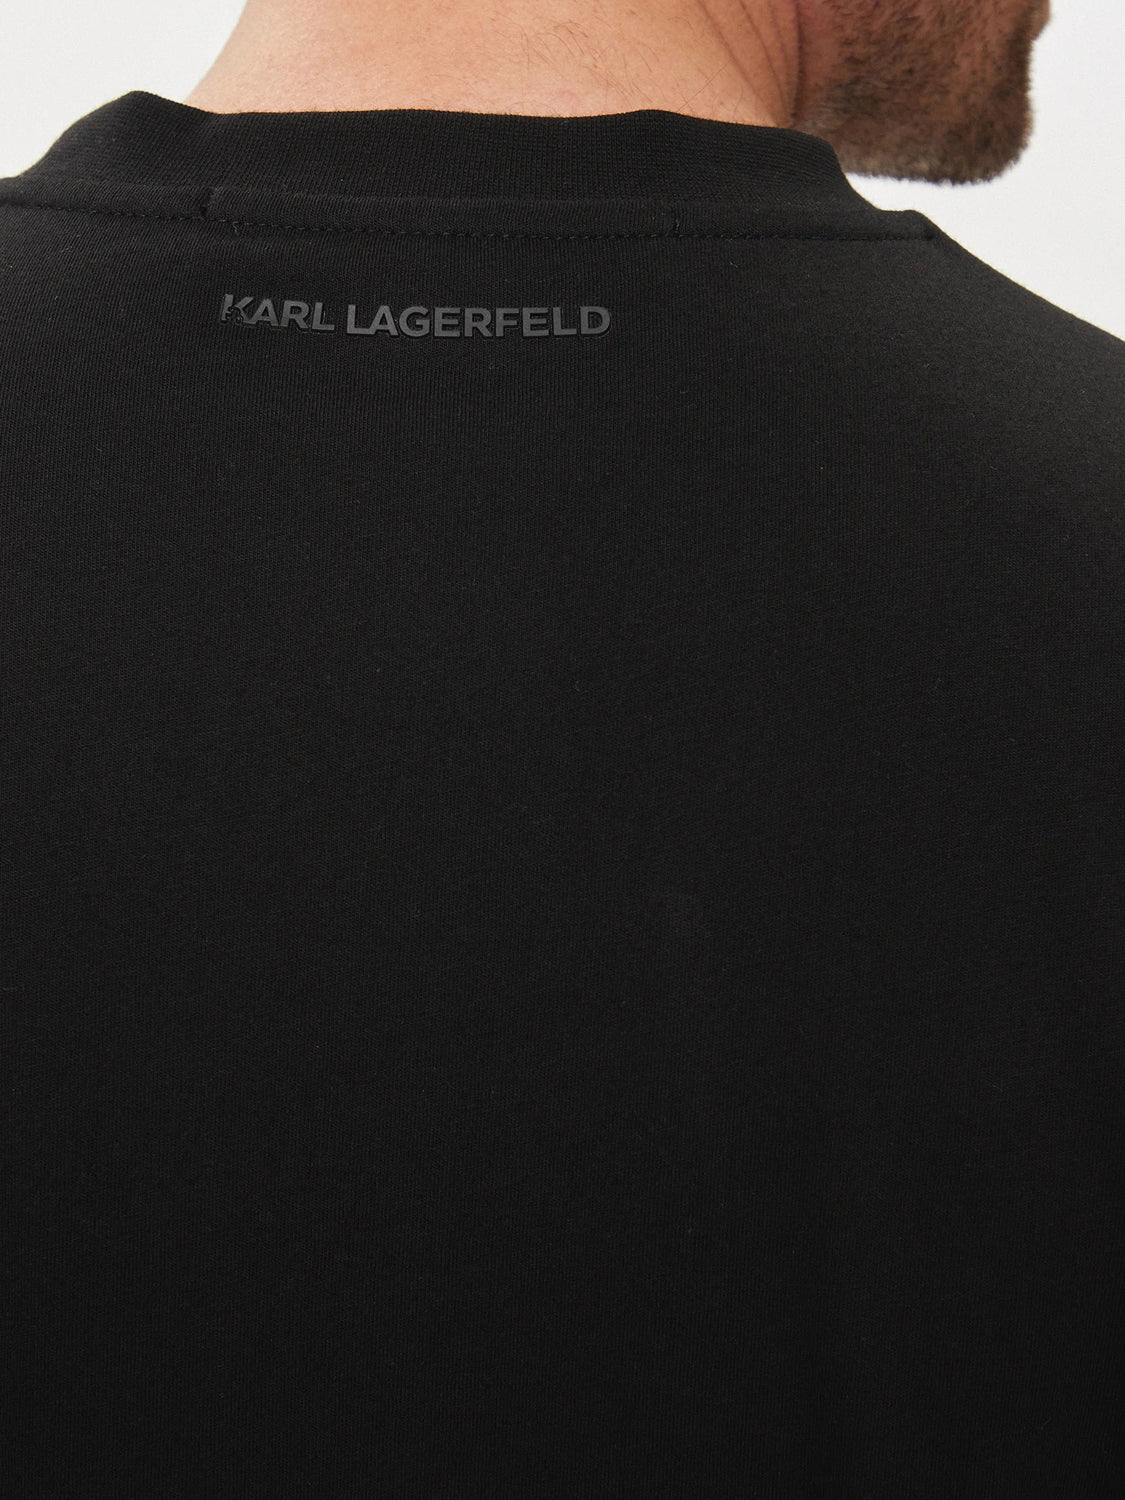 Karl Lagerfeld T Shirt Kl755082 Black Preto_shot3